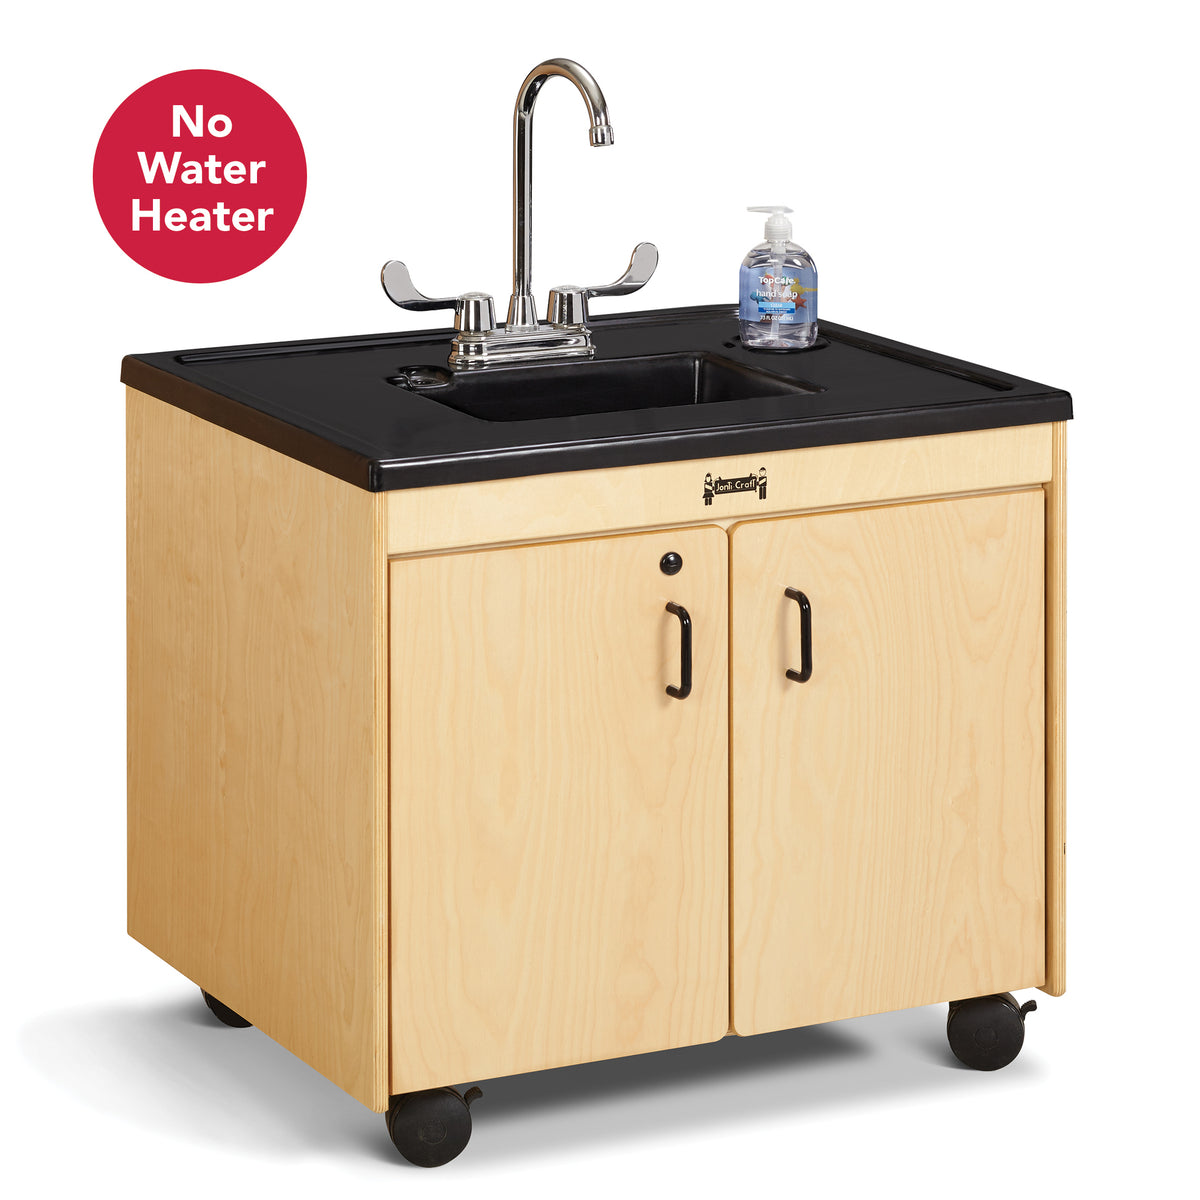 1380JC, Jonti-Craft Clean Hands Helper without Heater - 26" Counter - Plastic Sink